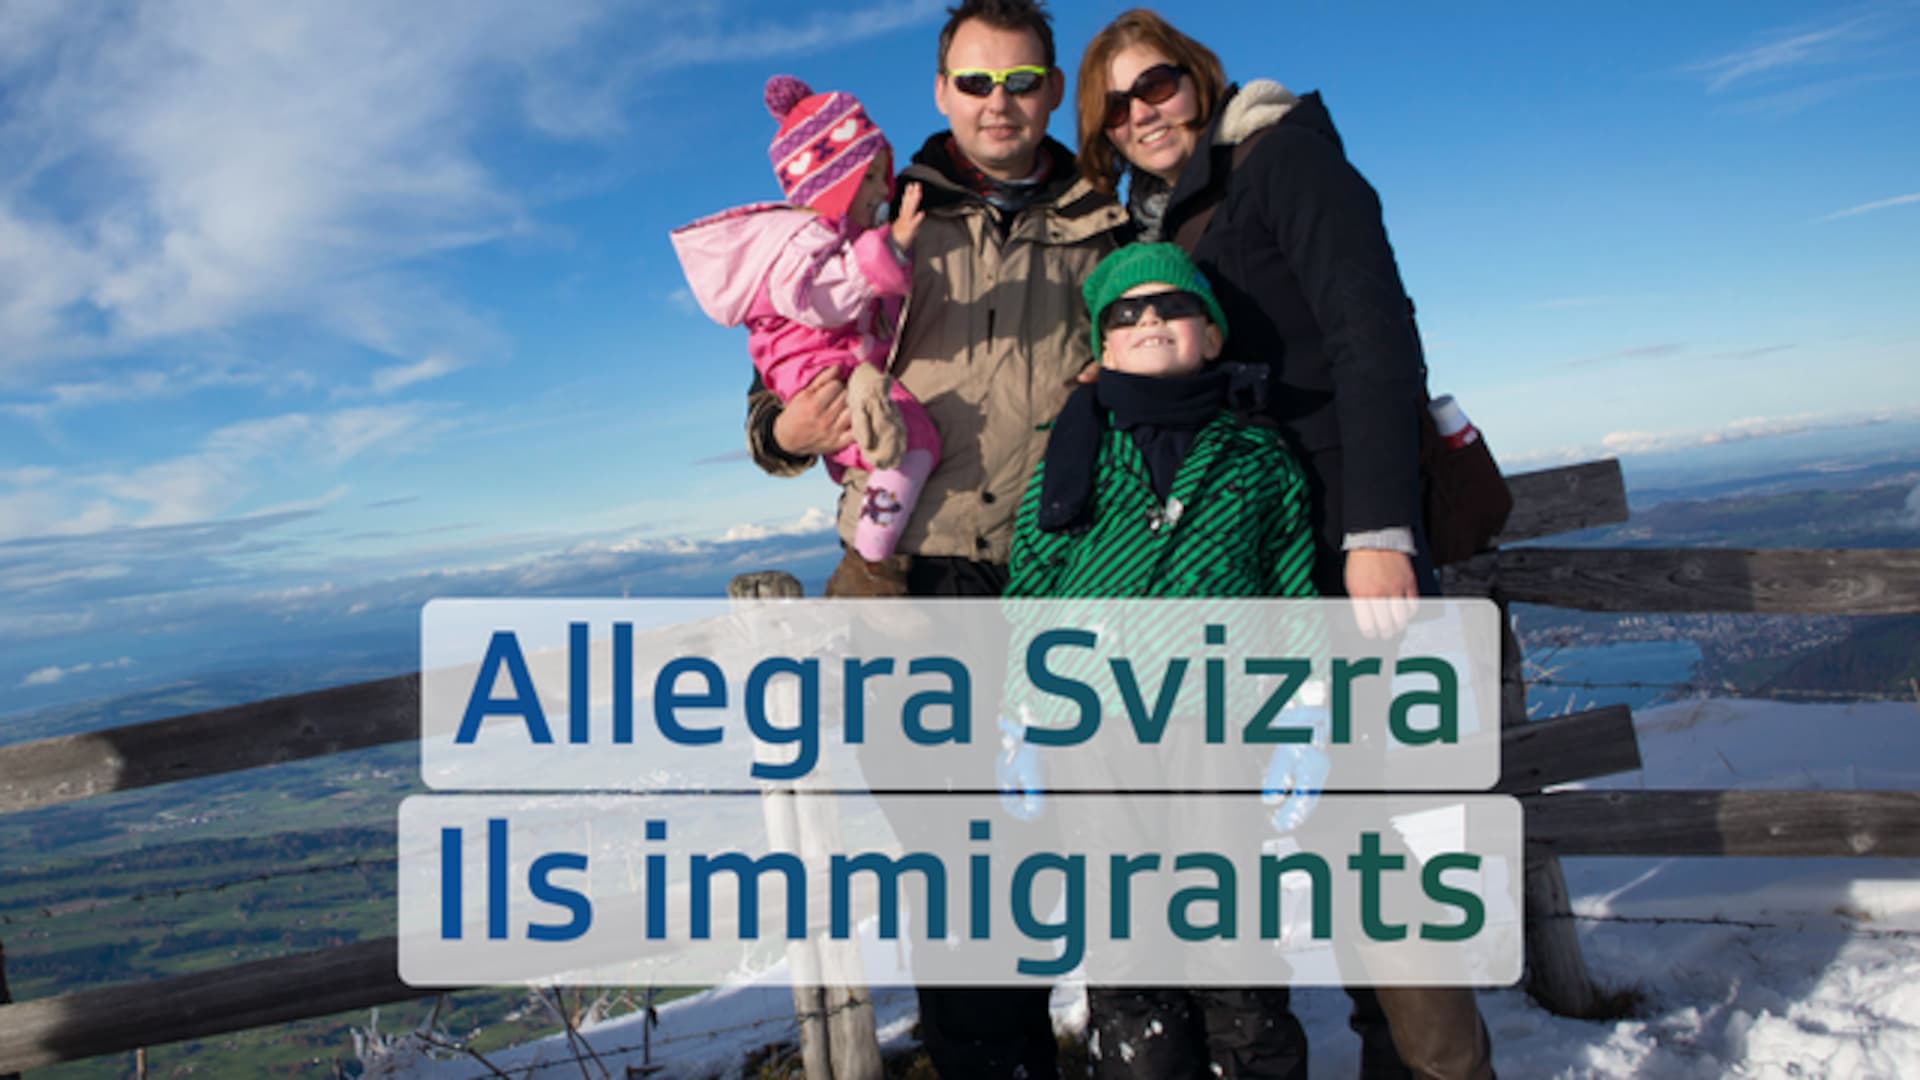 Allegra Svizra - Ils immigrants